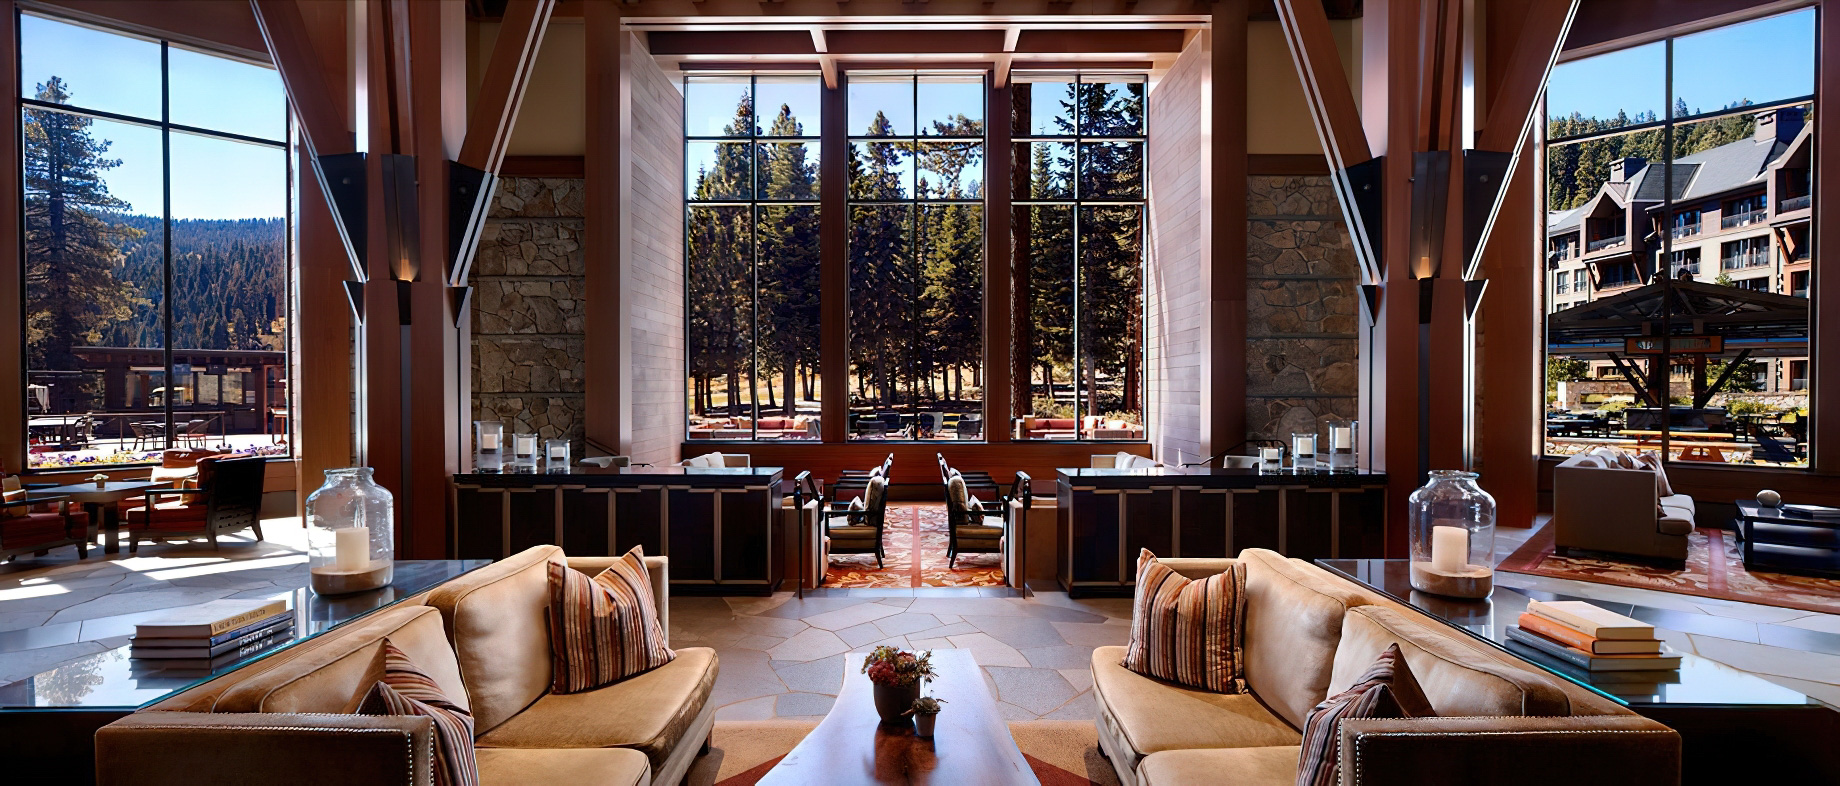 The Ritz-Carlton, Lake Tahoe Resort – Truckee, CA, USA – The Living Room Interior